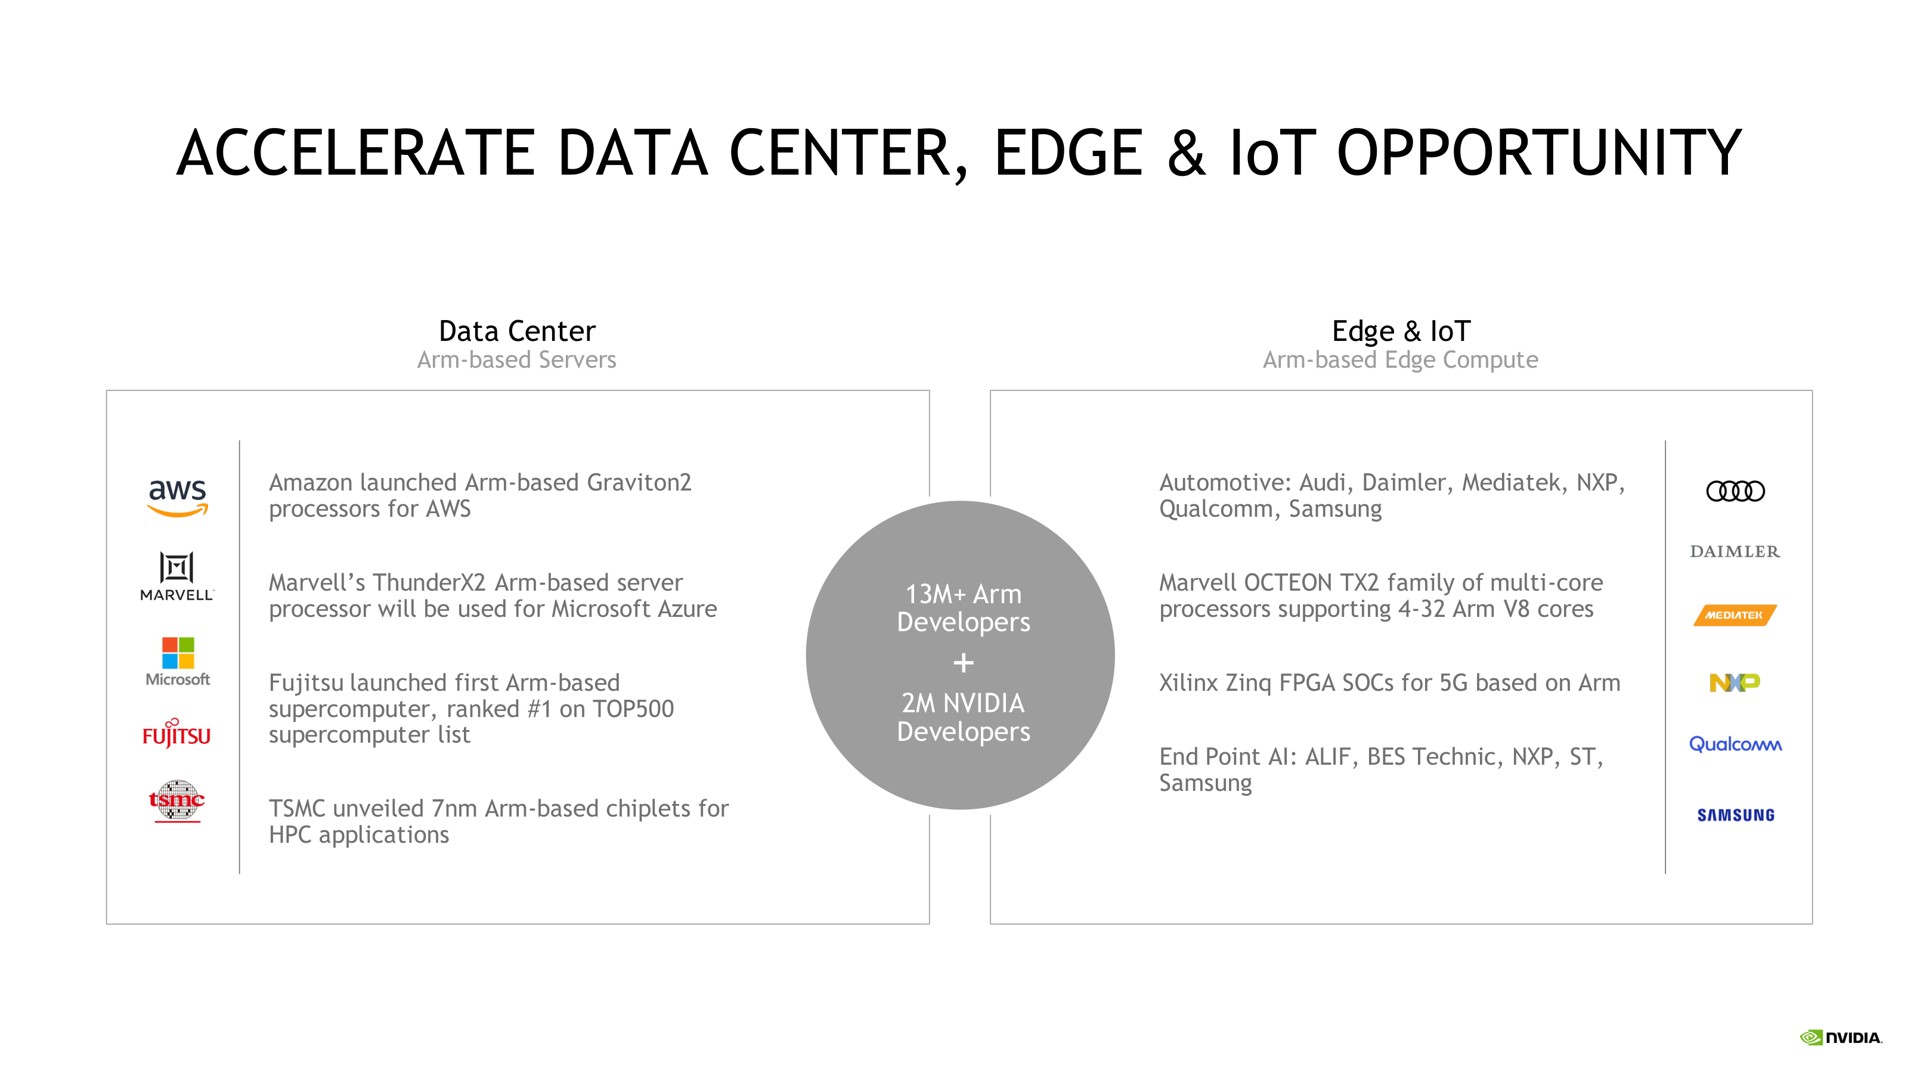 accelerate data center edge opportunity lot | NVIDIA